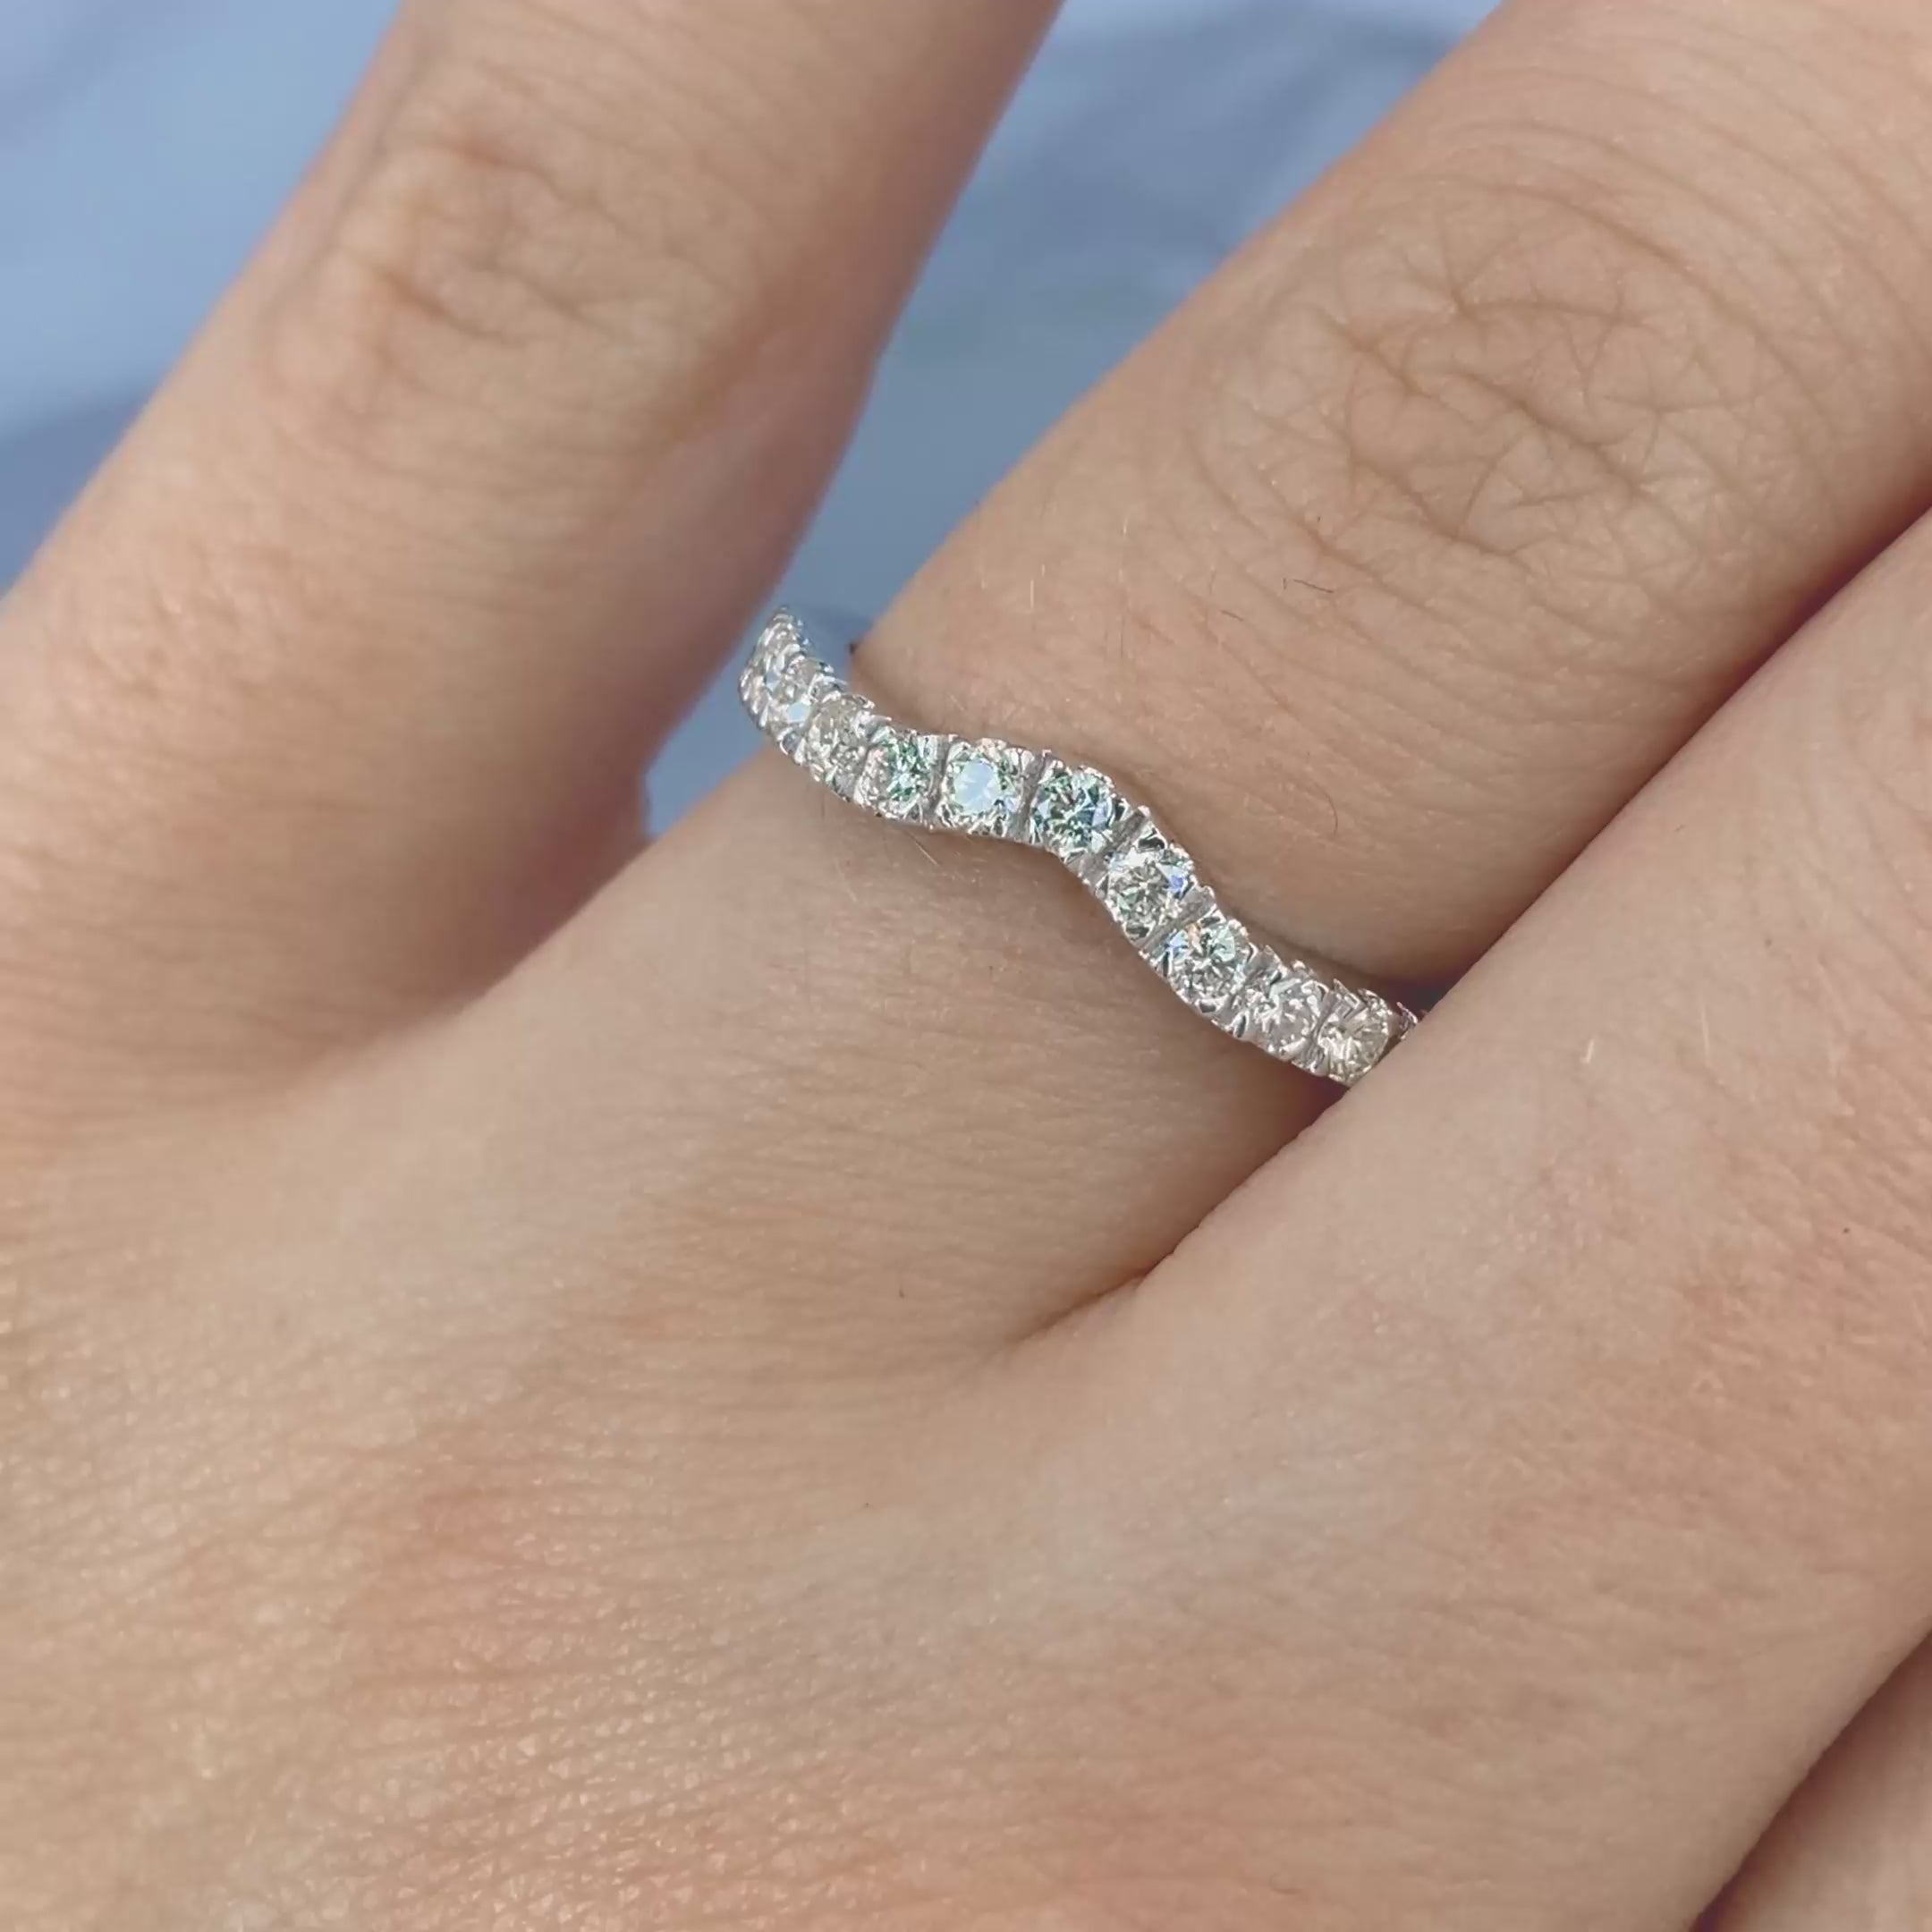 Bargain 0.50CT Round Cut Diamond Wedding Ring in 14KT White Gold